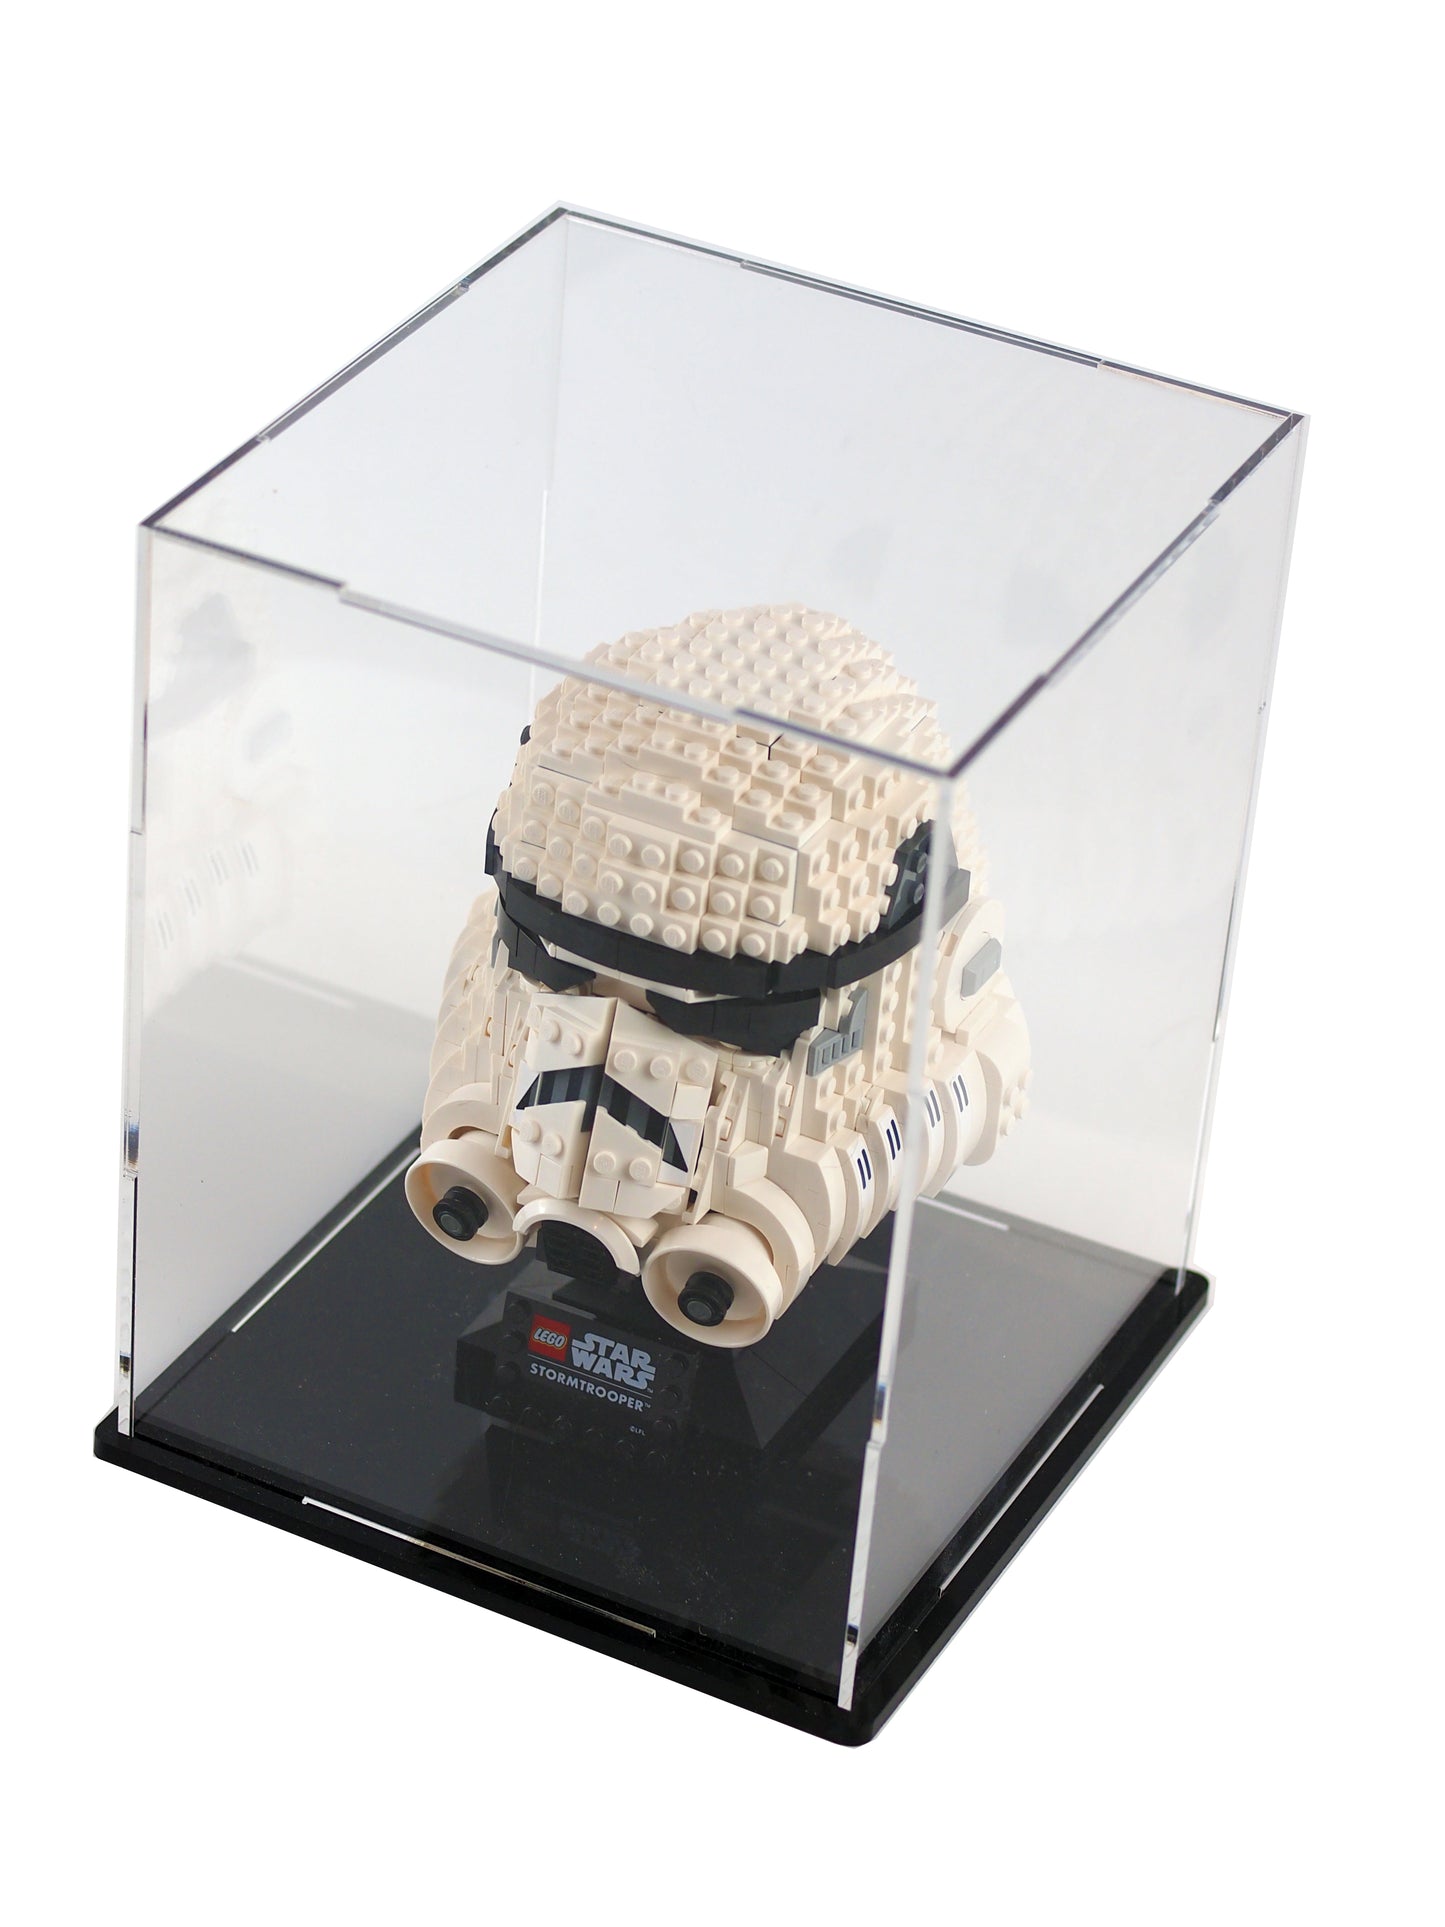 Display Case For LEGO Stormtrooper Helmet (75276)